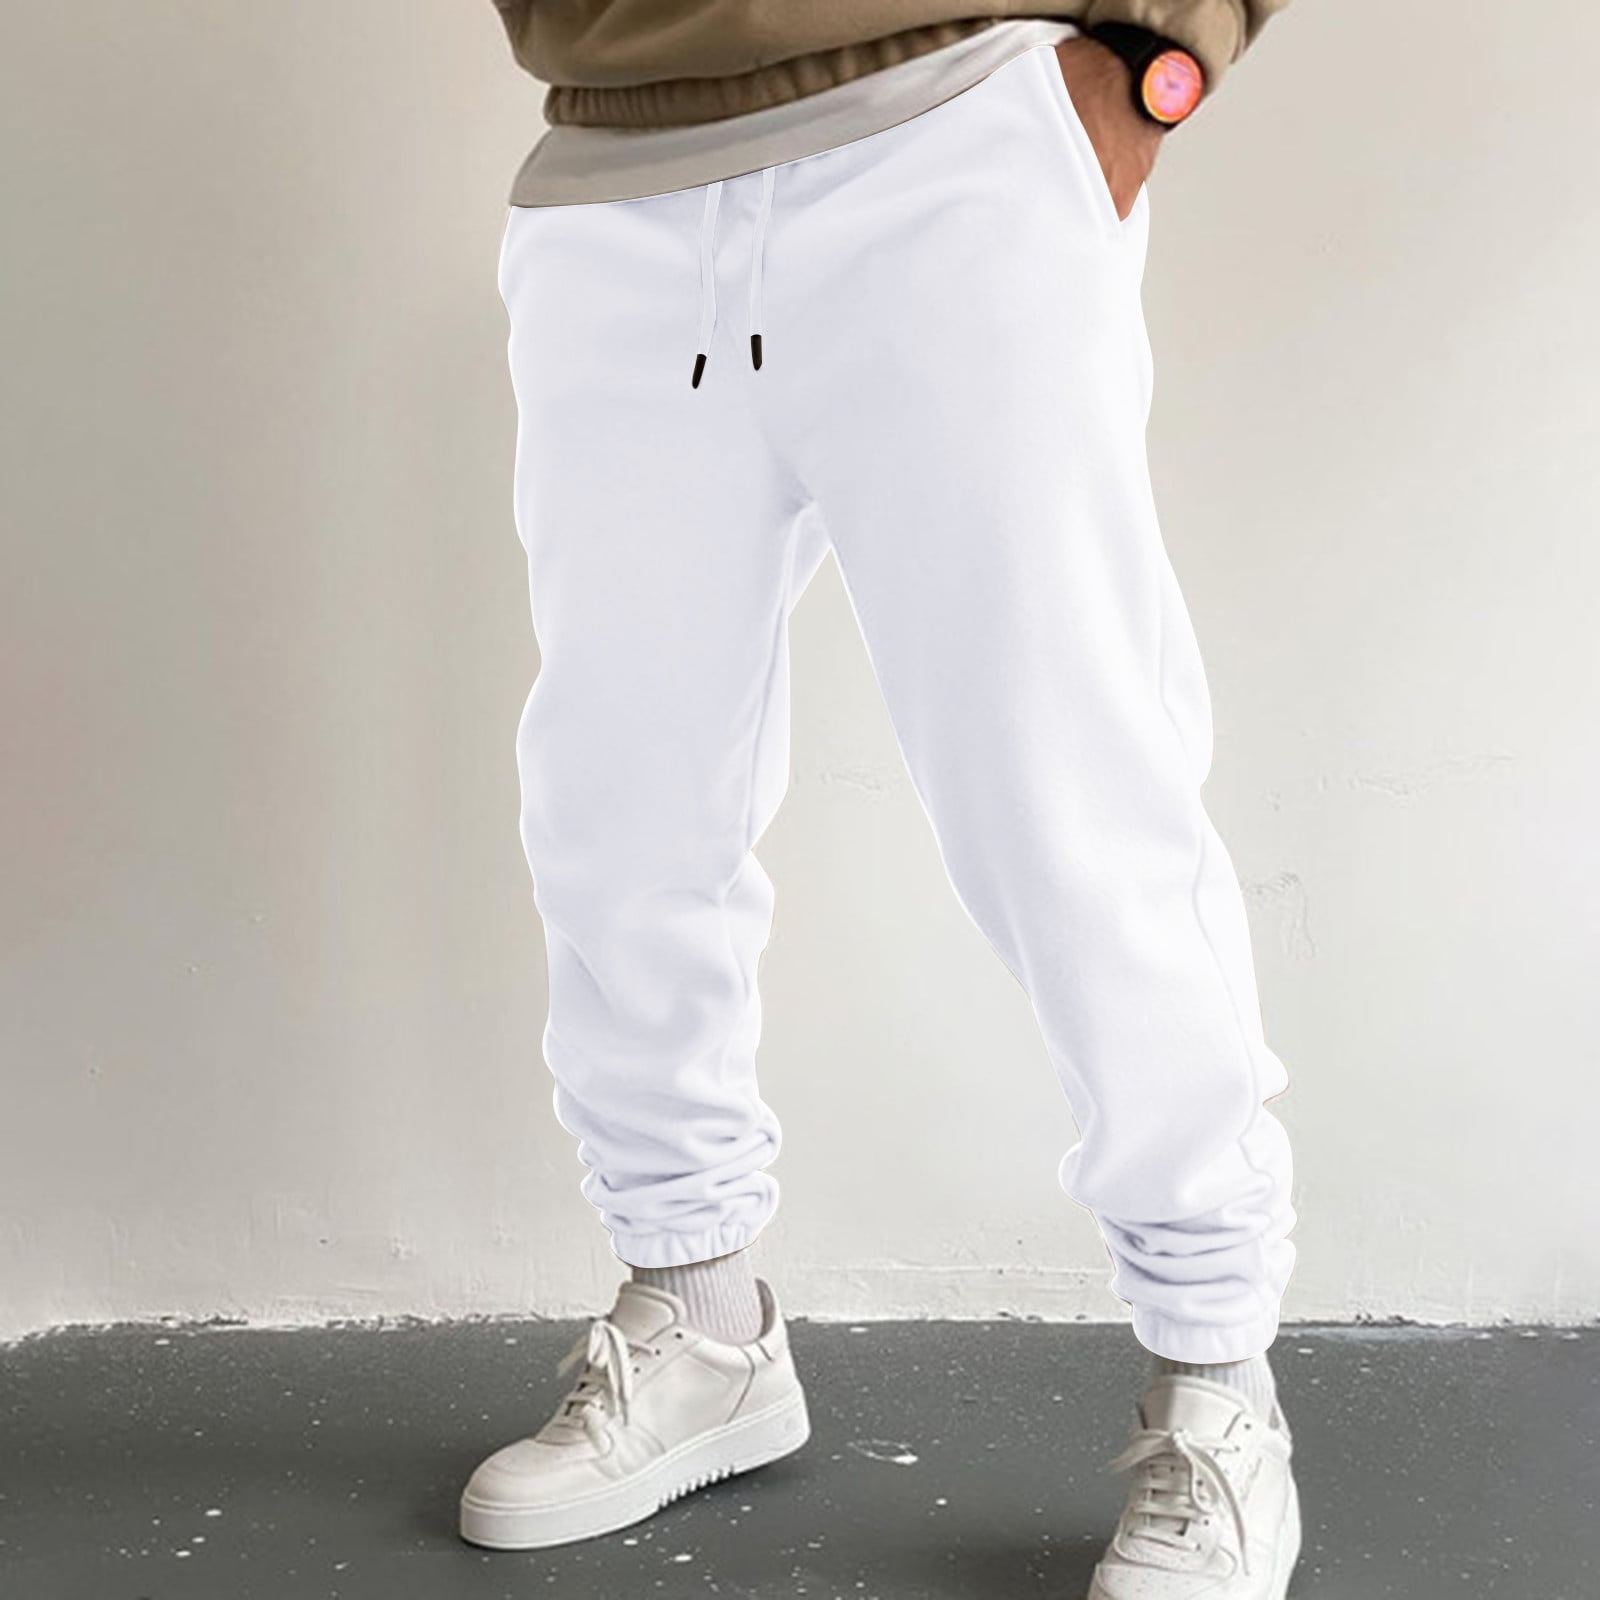 Men's Trousers White PNG Images & PSDs for Download | PixelSquid -  S11324890B-hangkhonggiare.com.vn